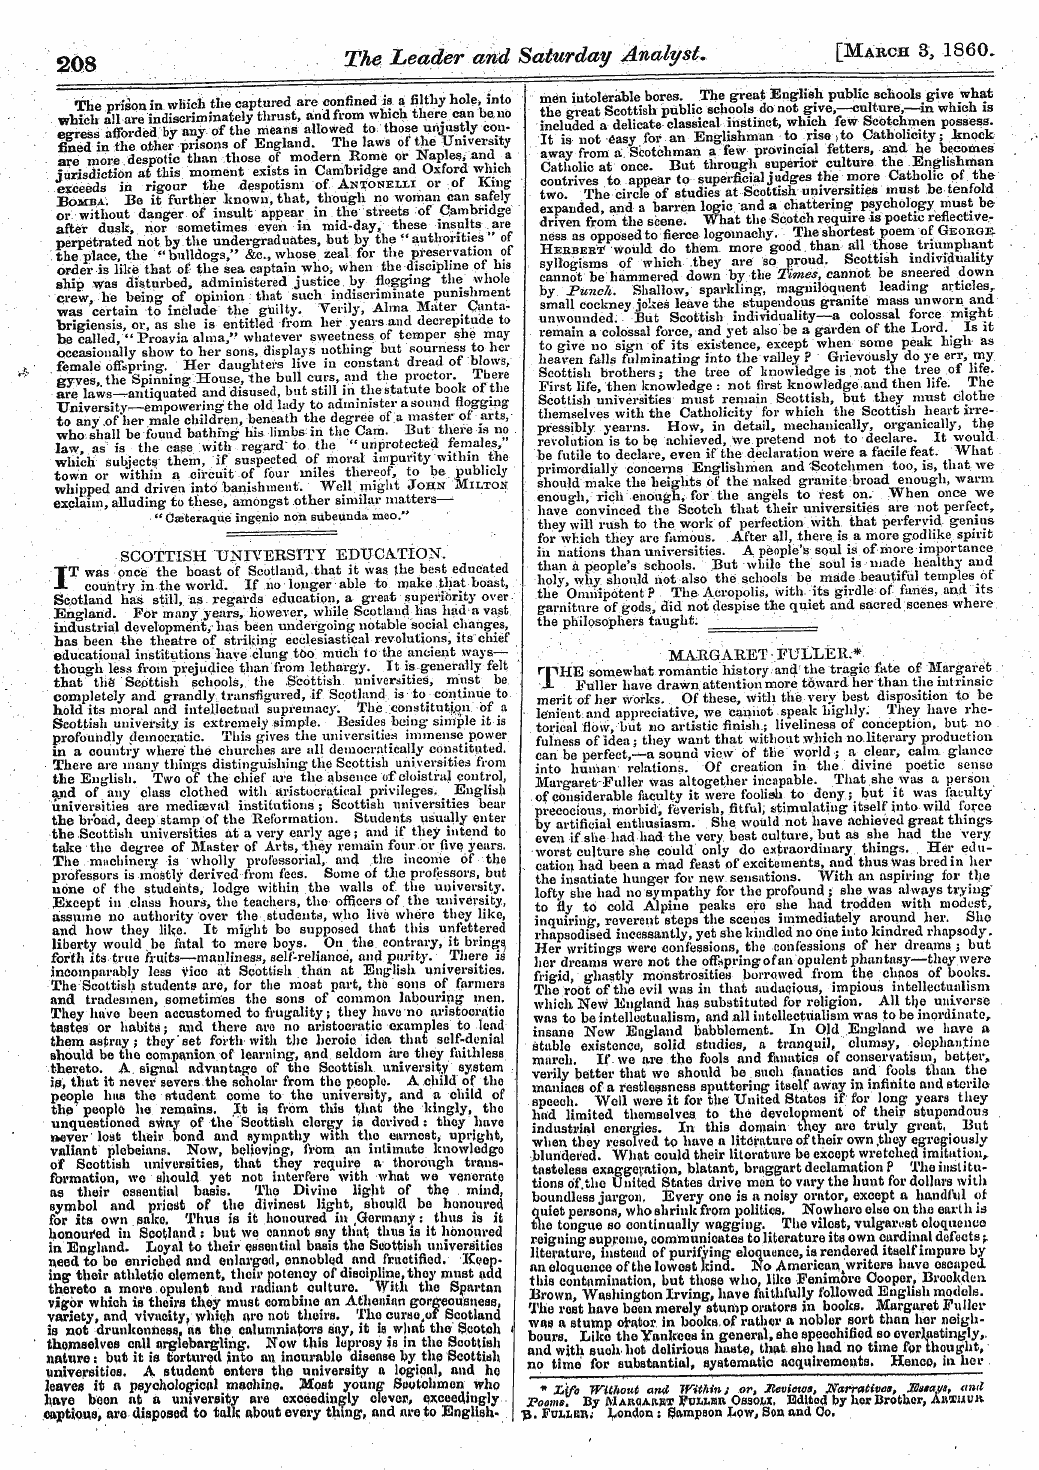 Leader (1850-1860): jS F Y, 2nd edition - 208 The Leader Arid Saturday Analyst. [M...